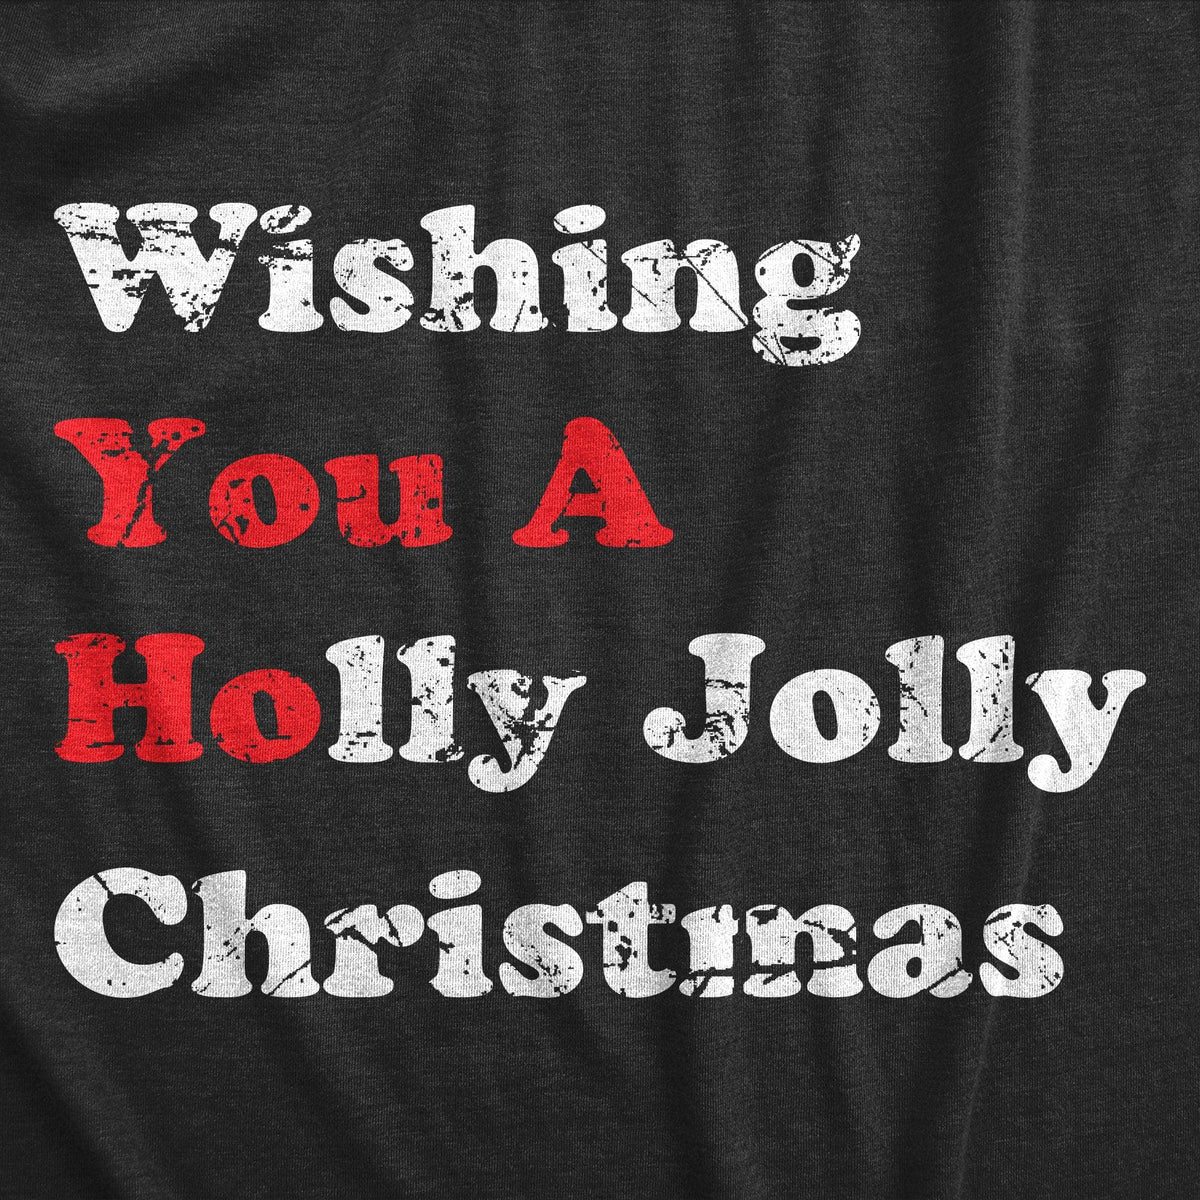 Wishing You a Holly Jolly Christmas Men&#39;s Tshirt  -  Crazy Dog T-Shirts